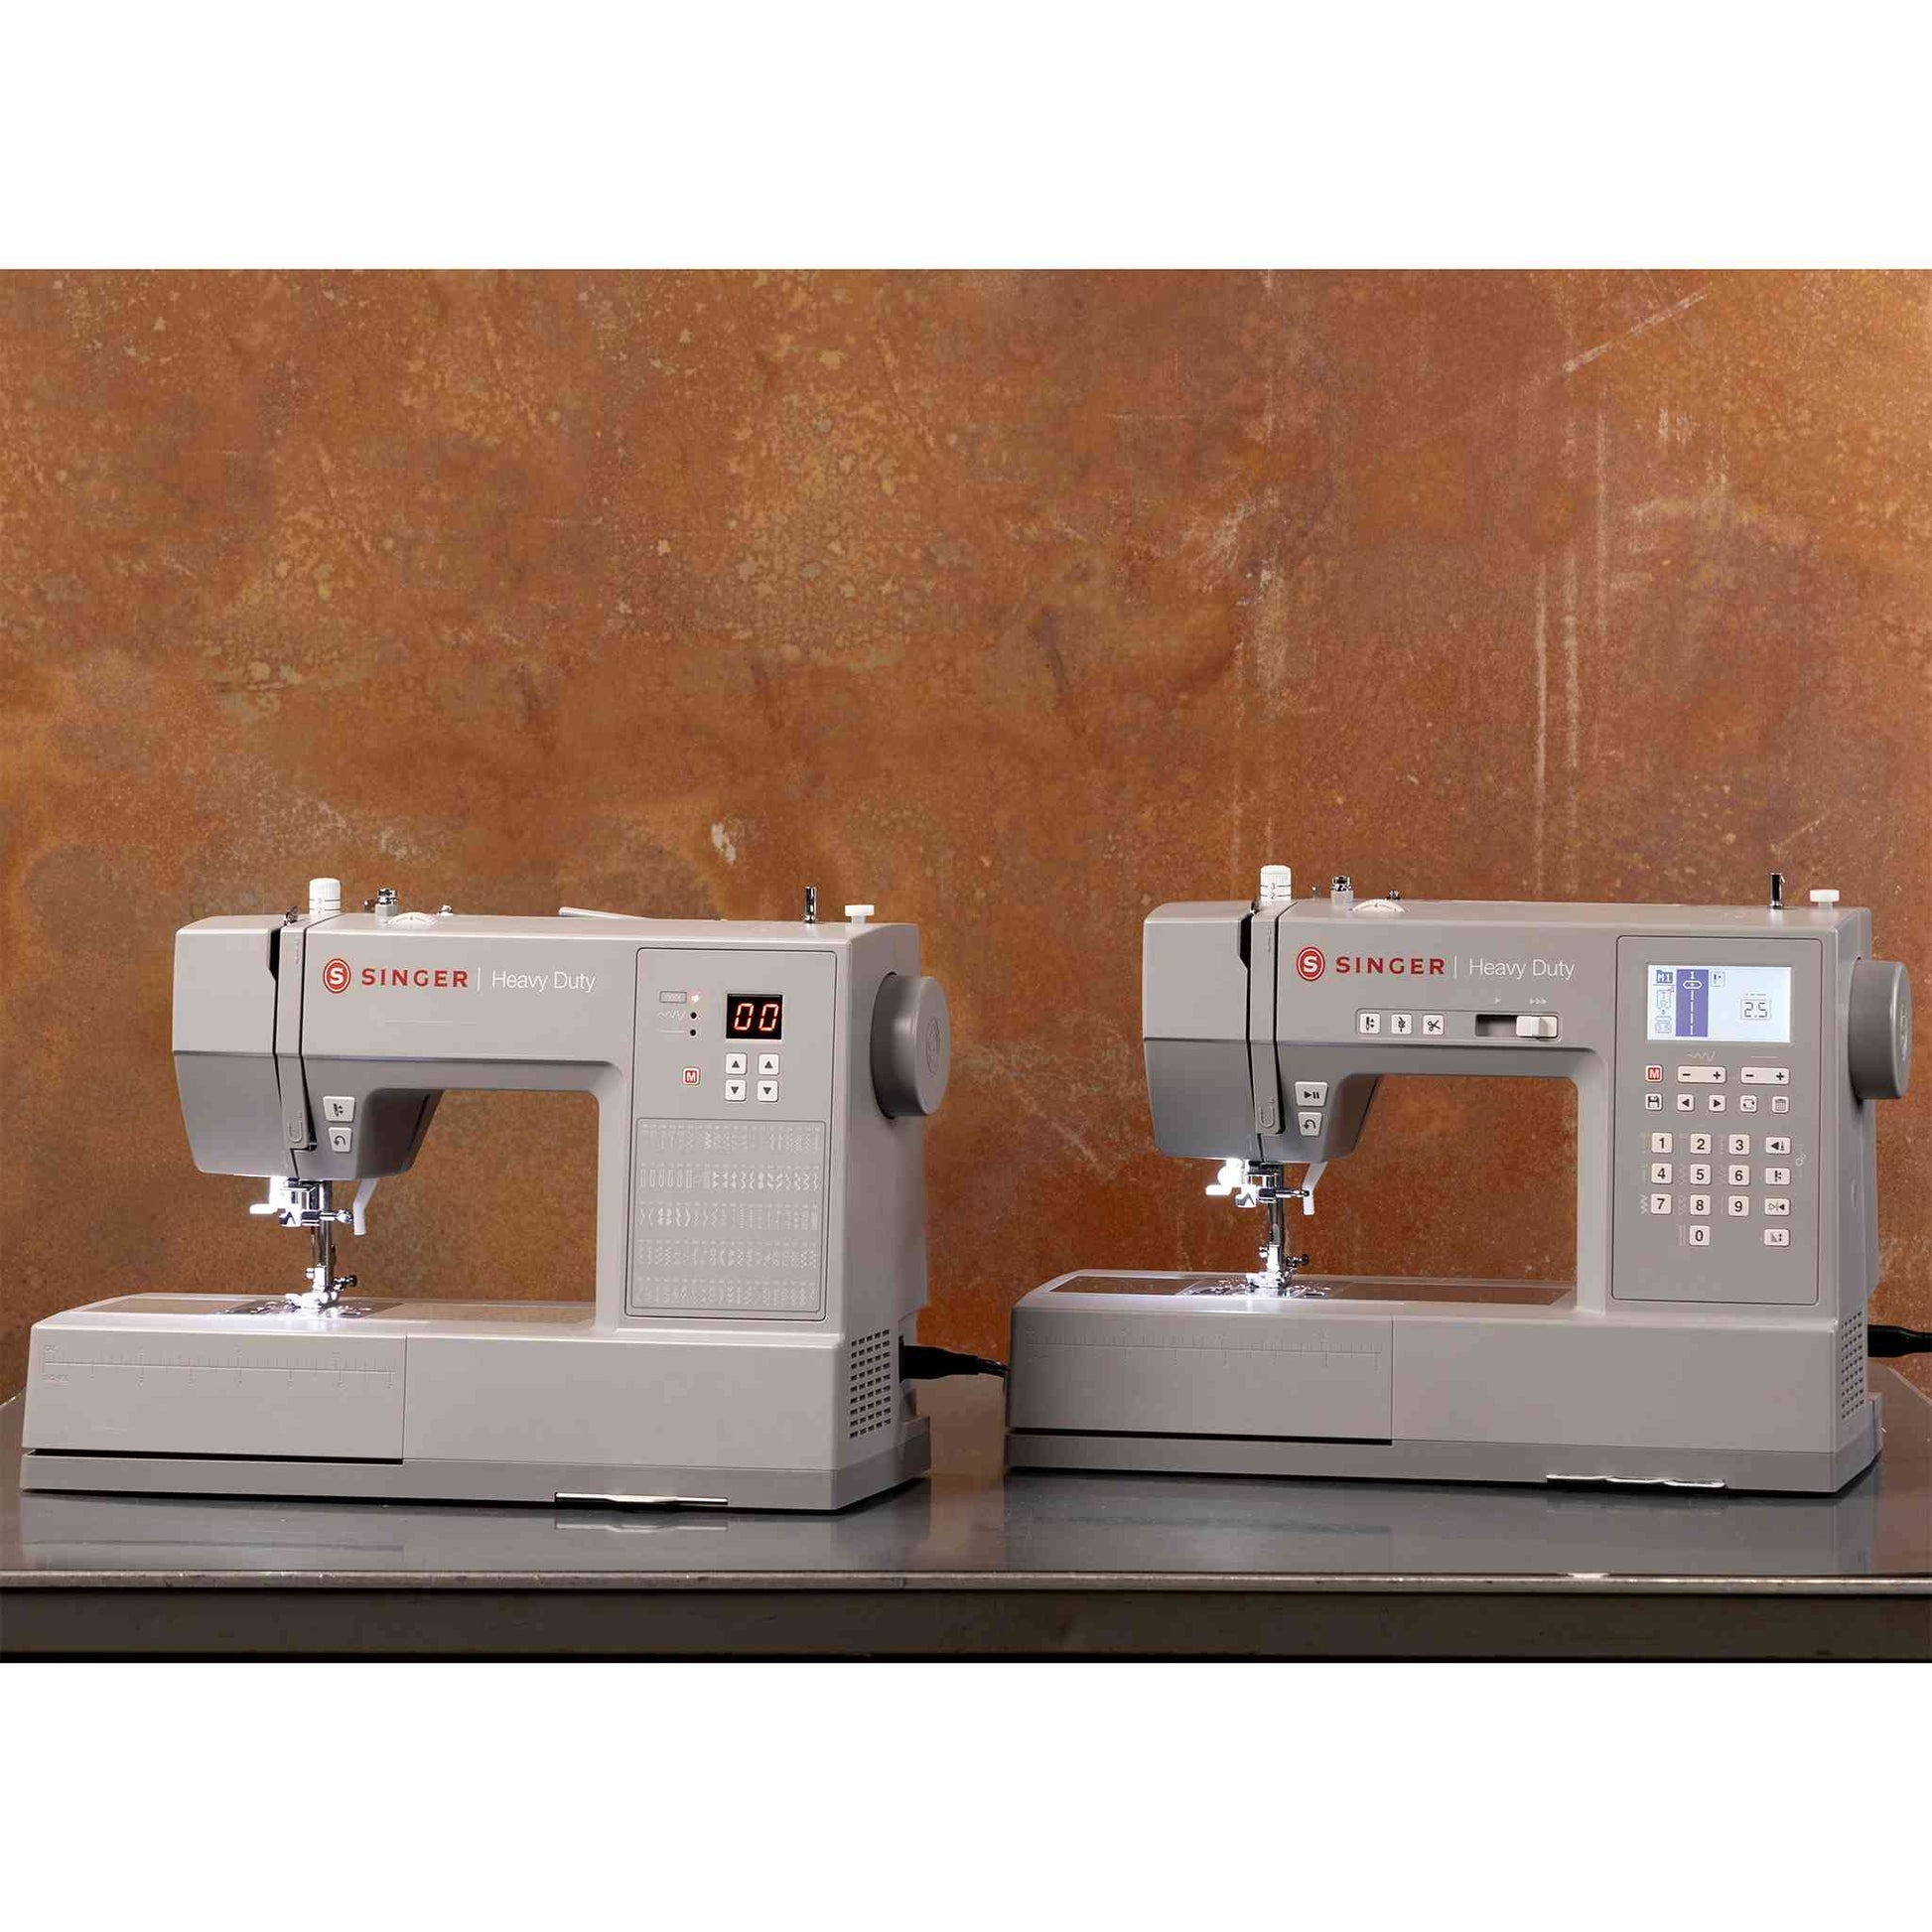 Singer Heavy Duty HD6805C Digital Sewing Machine – Bobbin and Ink